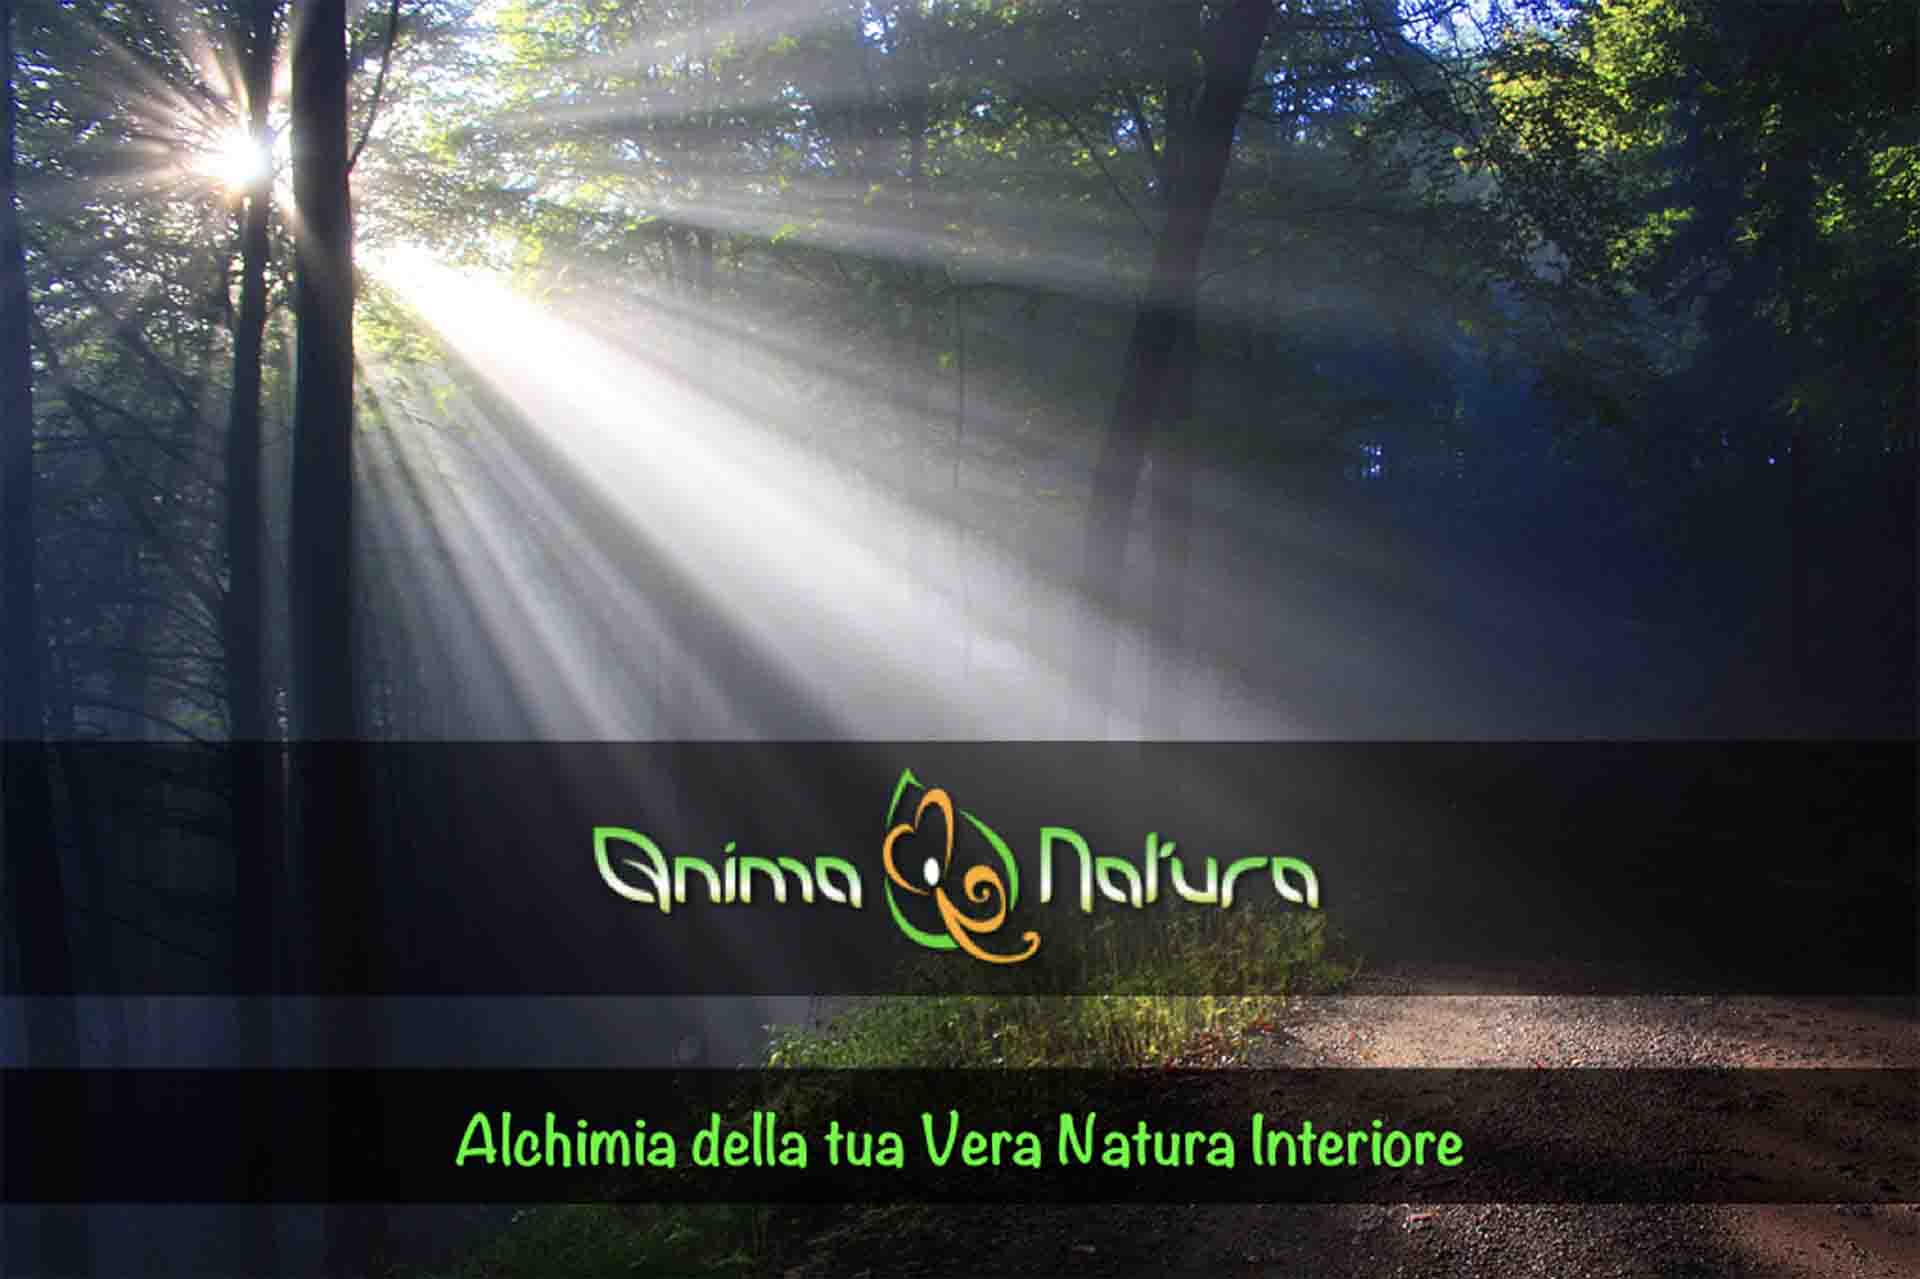 Seminario Anima Natura relatore Germano Caroli presso B&B & Meditation Center Zorba Il Buddha Passerano Marmorito Asti